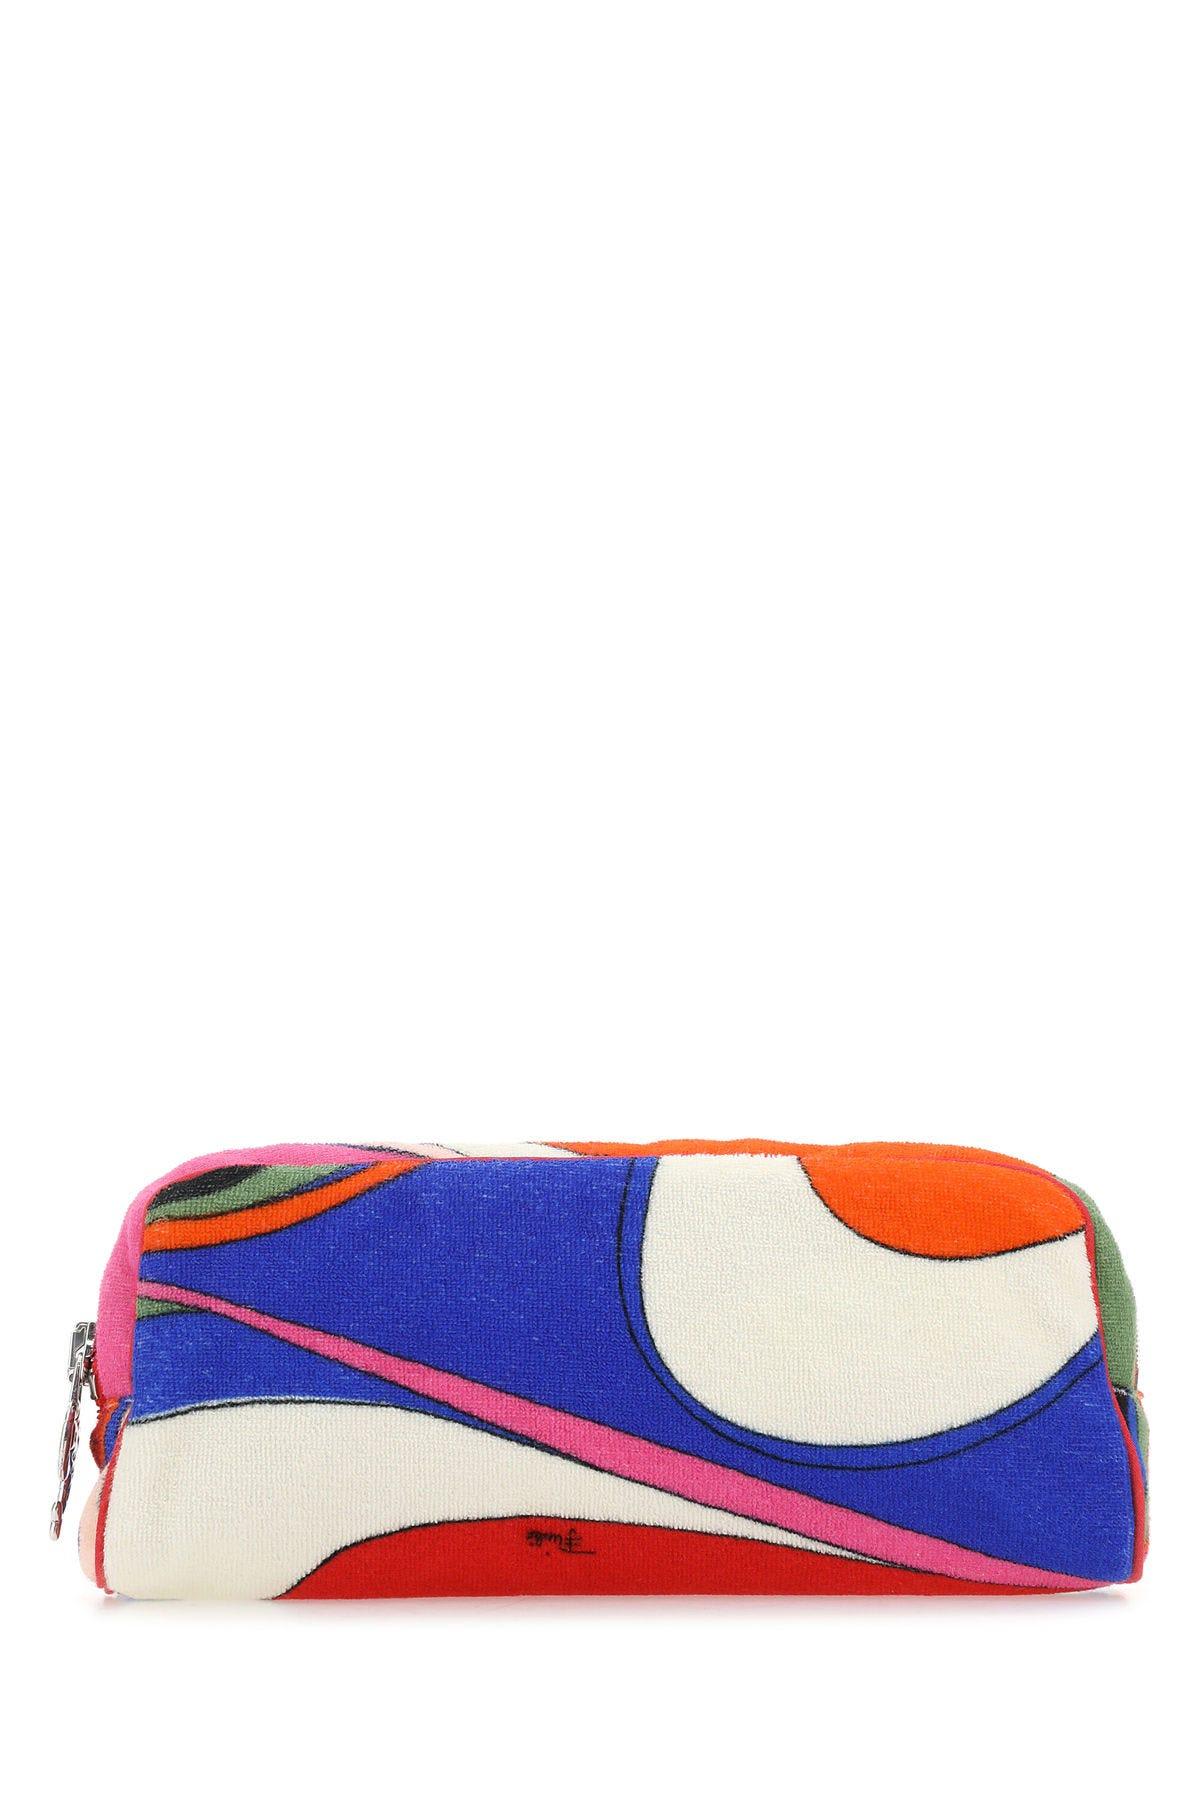 Shop Emilio Pucci Multicolor Fabric Beauty Case